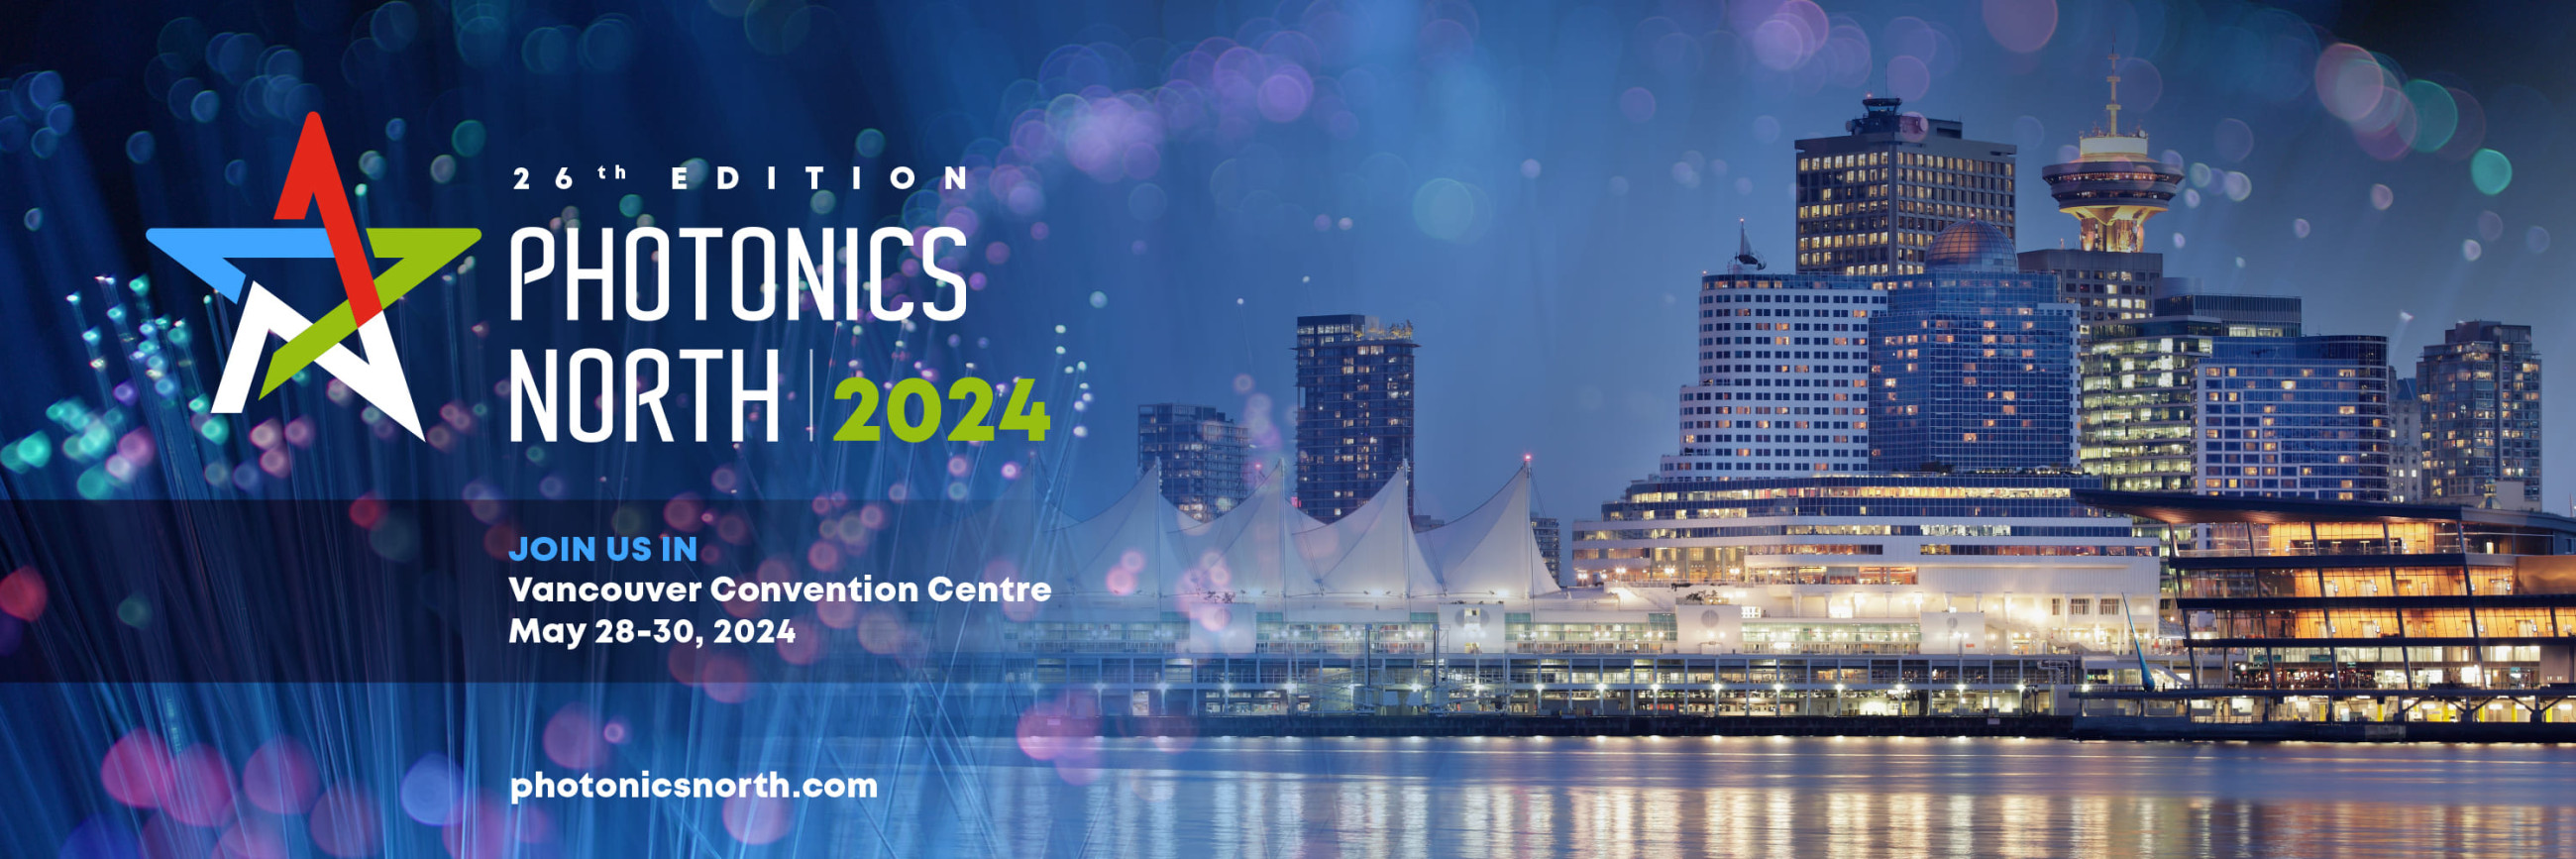 Photonics North 2024 Conference